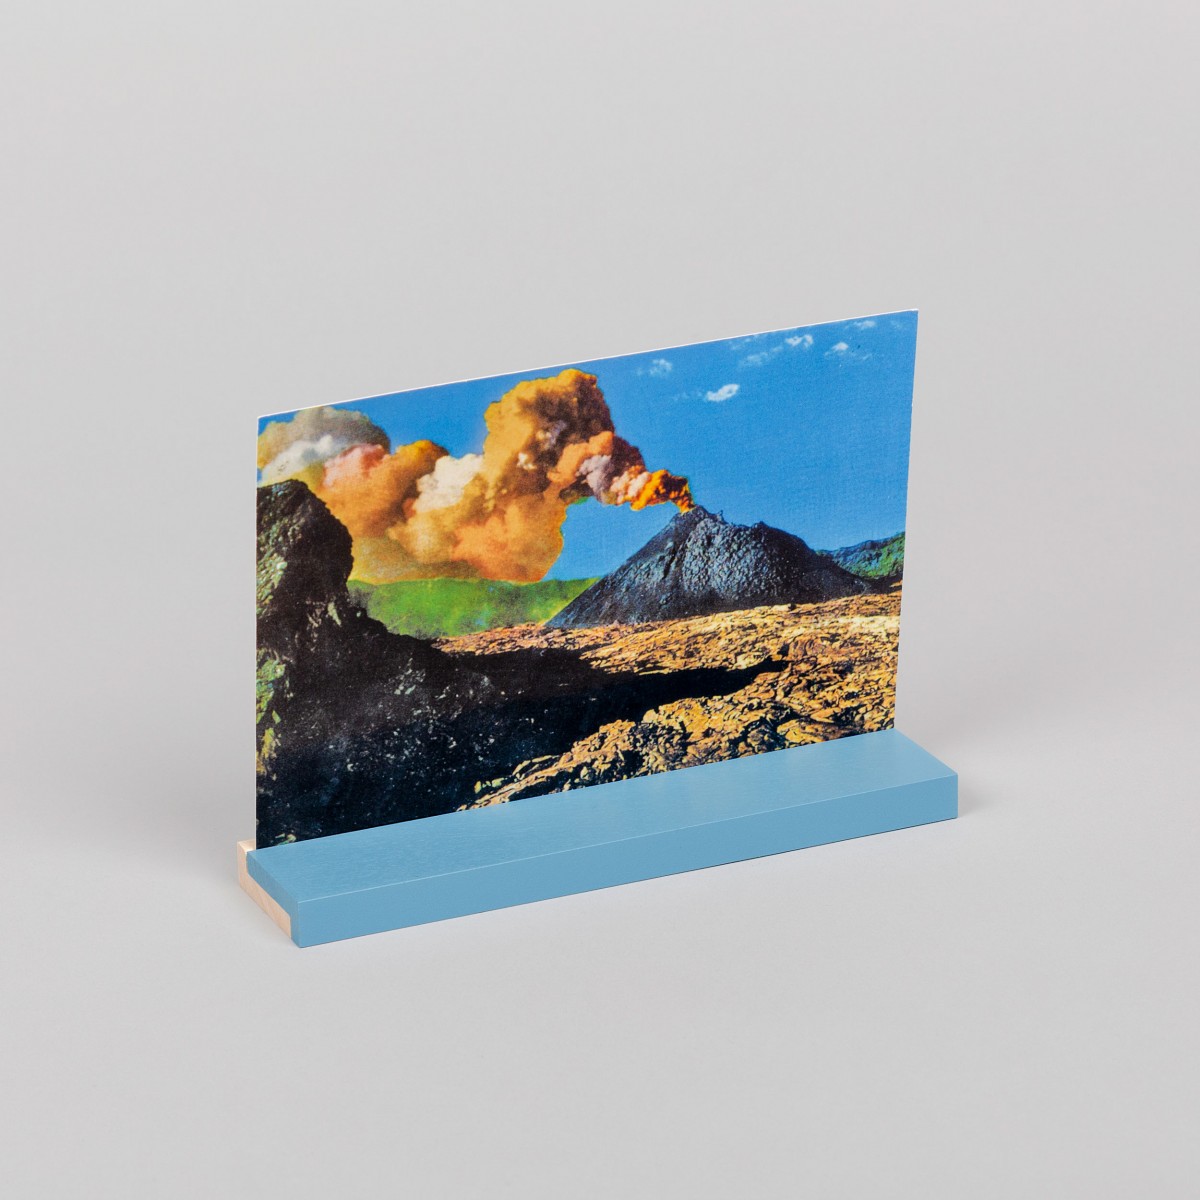 LOOP Postkarten und Fotohalter
Pastellblau / Ahornholz - Corteccia